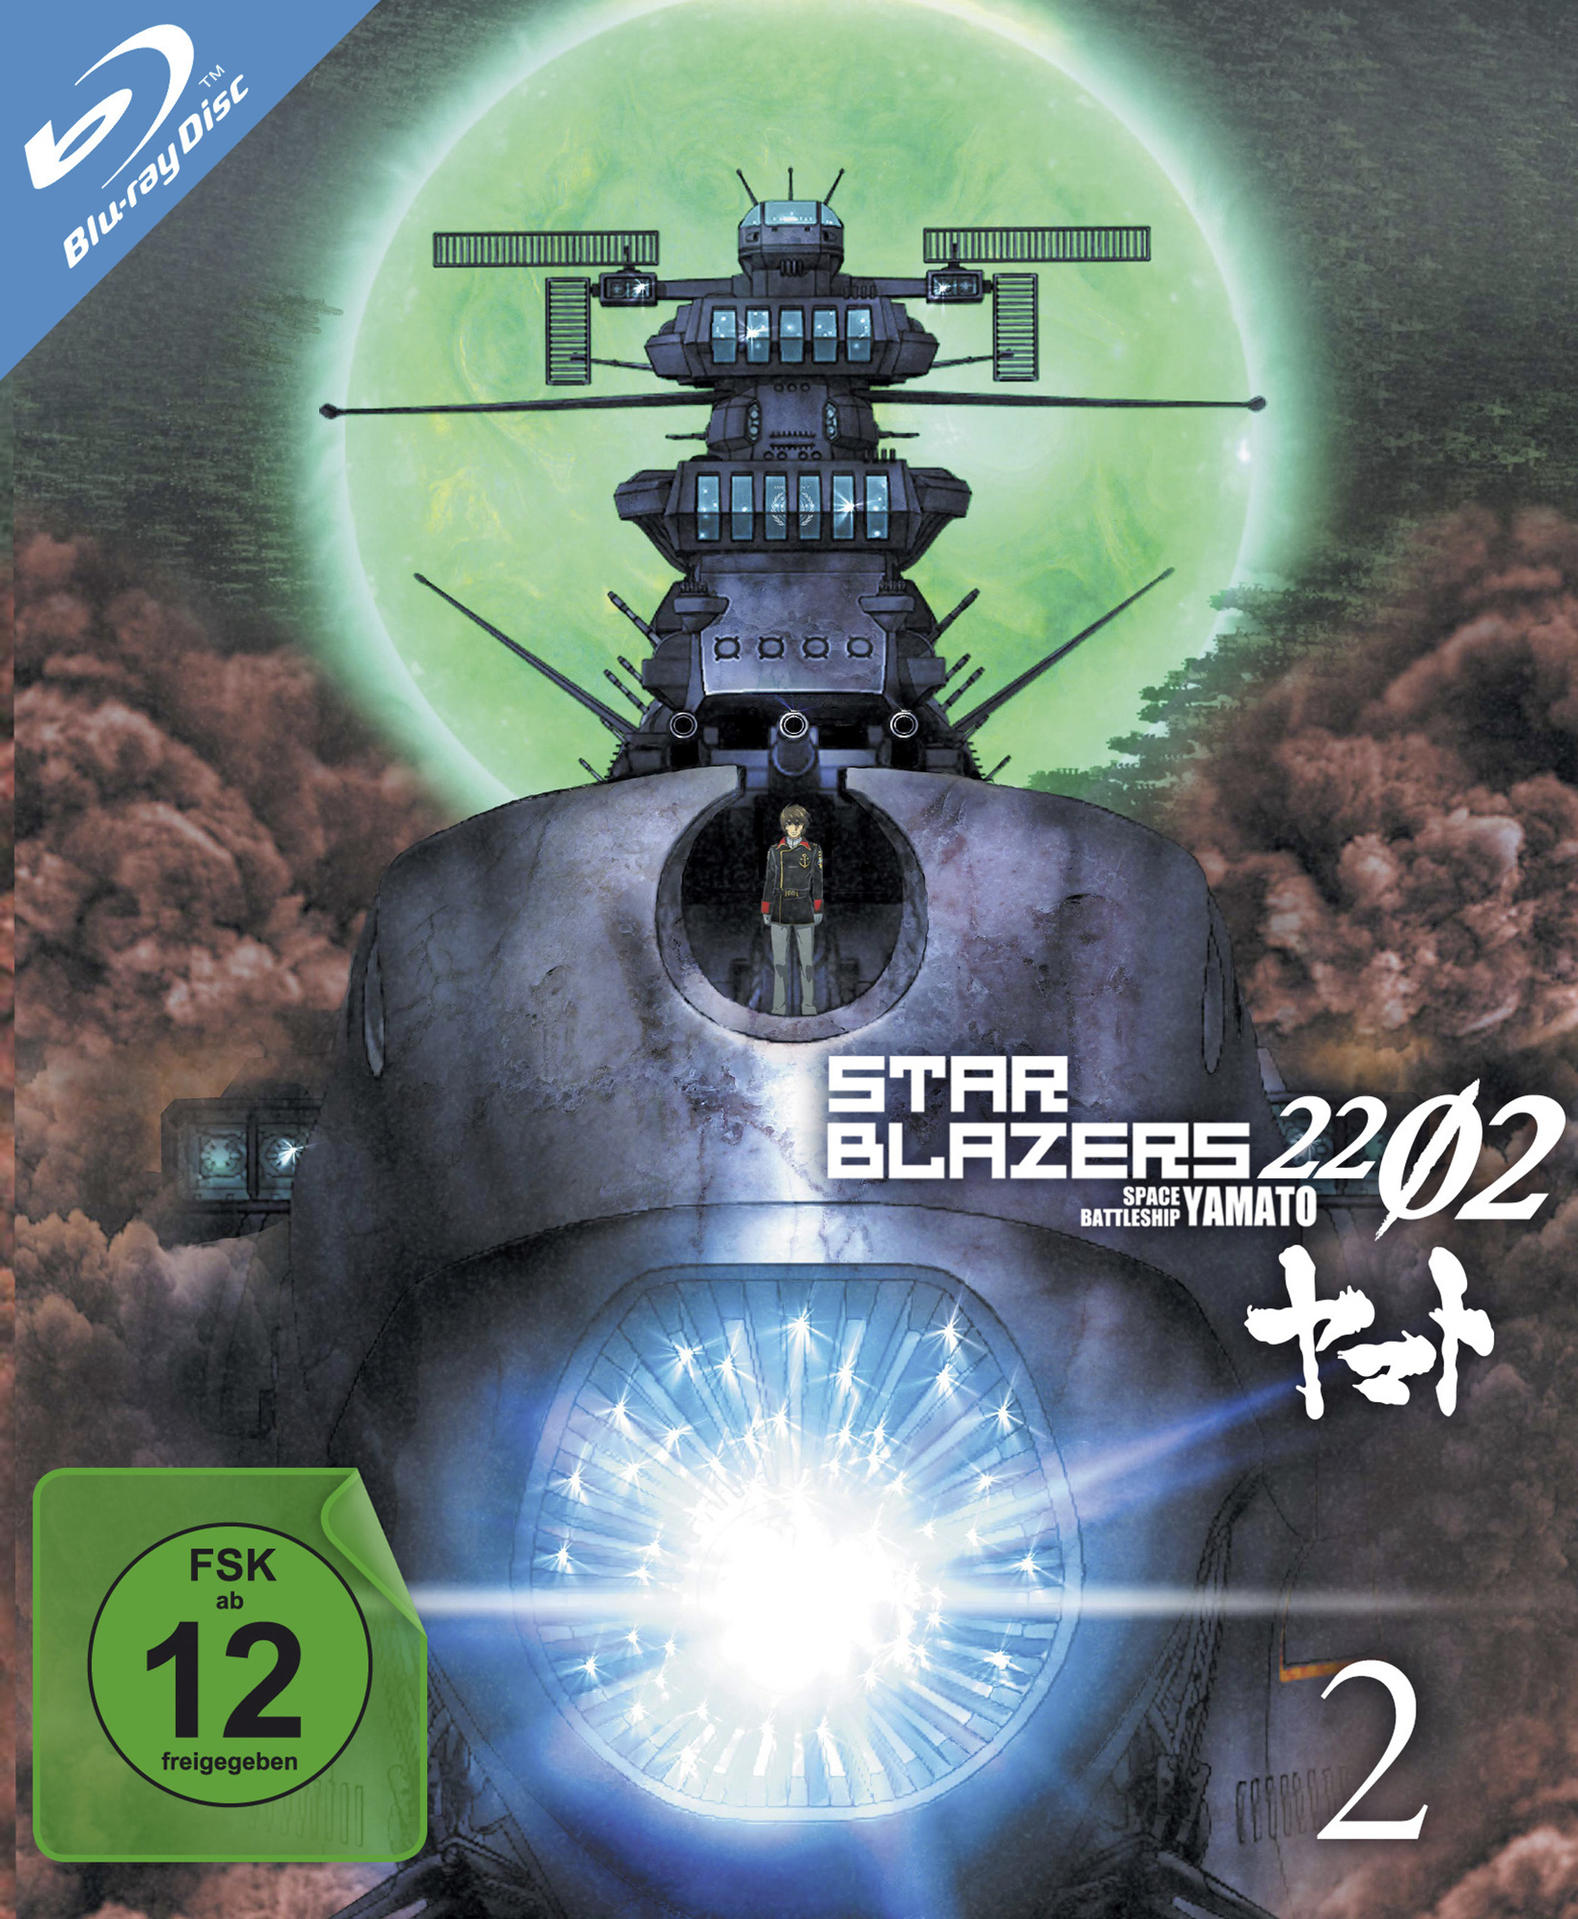 Star Blazers 2202 - Blu-ray Yamato Space Battleship Vol.2 